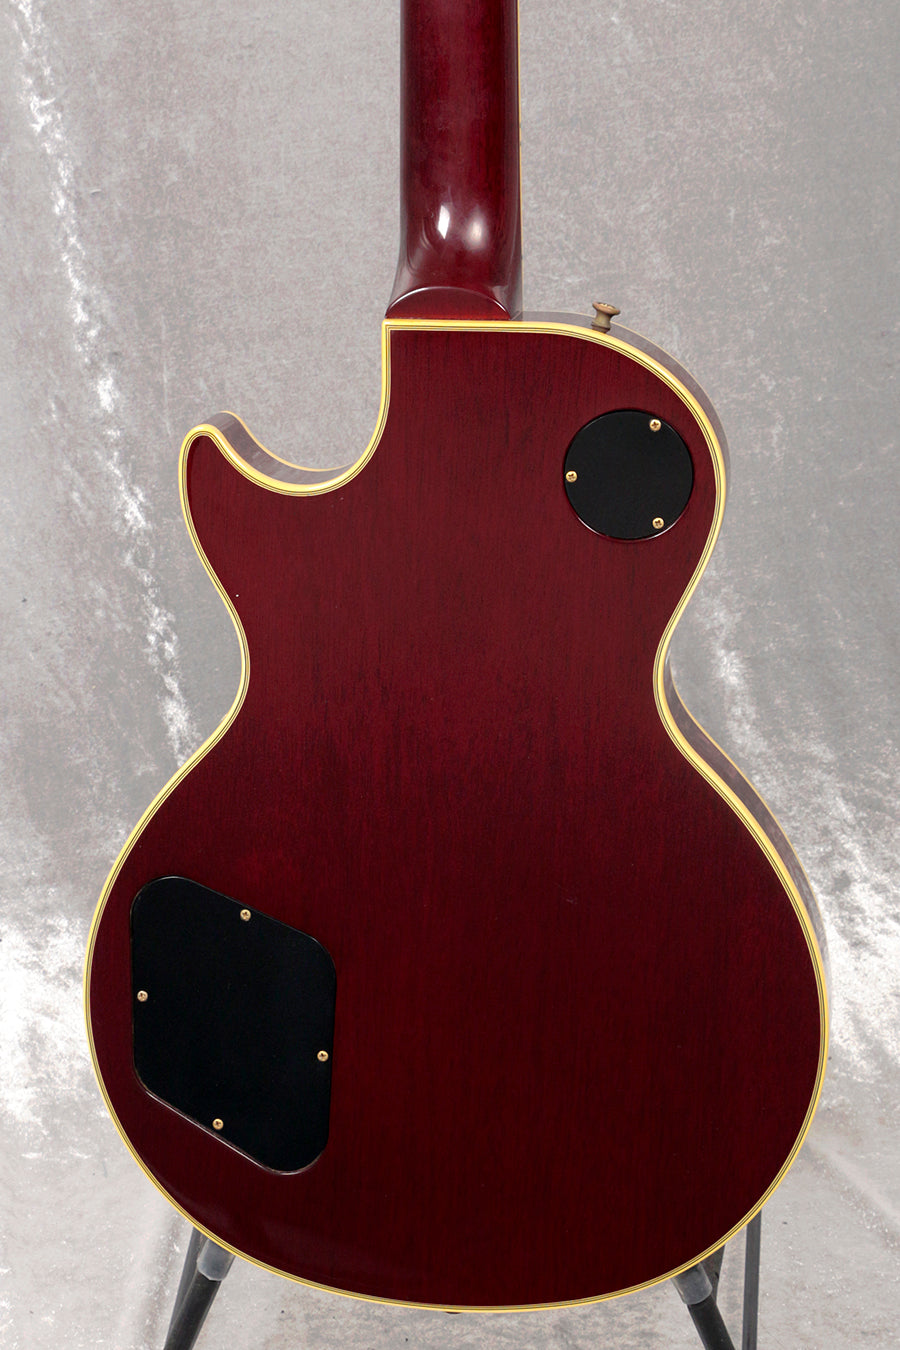 [SN 83139578] USED Gibson / Les Paul Custom Wine Red 1989 [06]